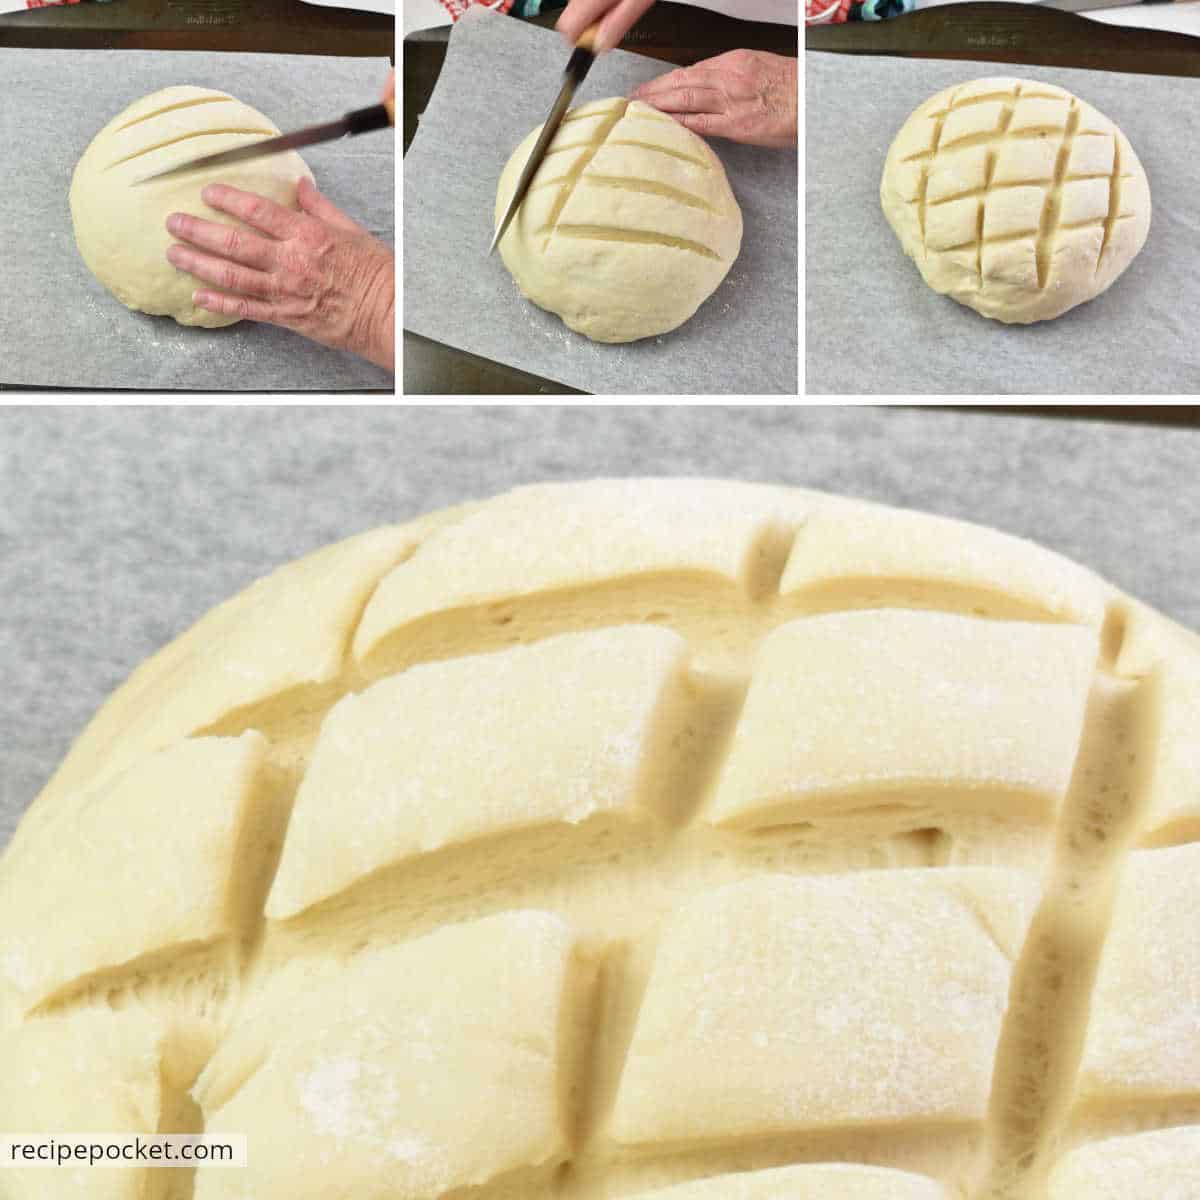 Cob bread dough the a diamond pattern cut into the dough.